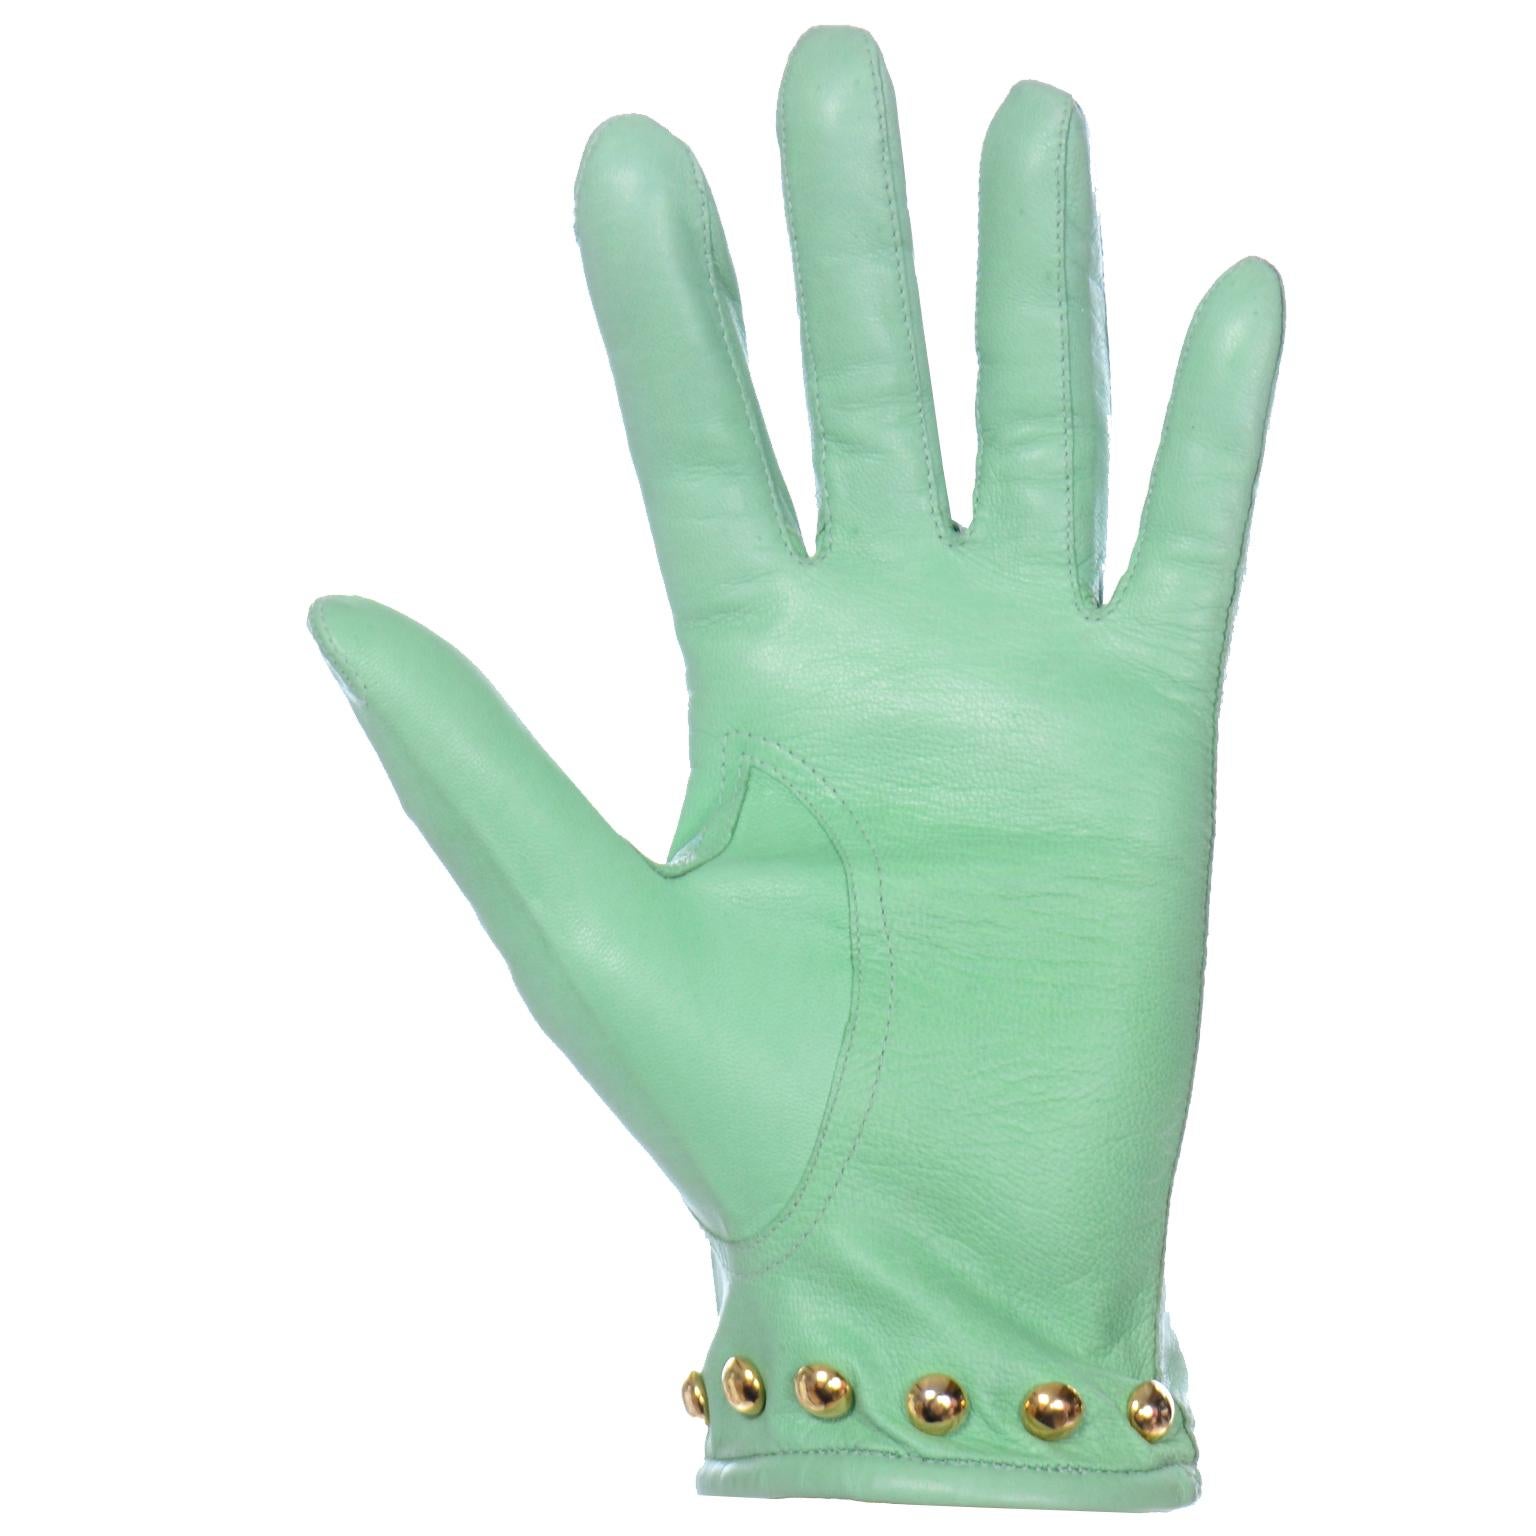 1980s gloves